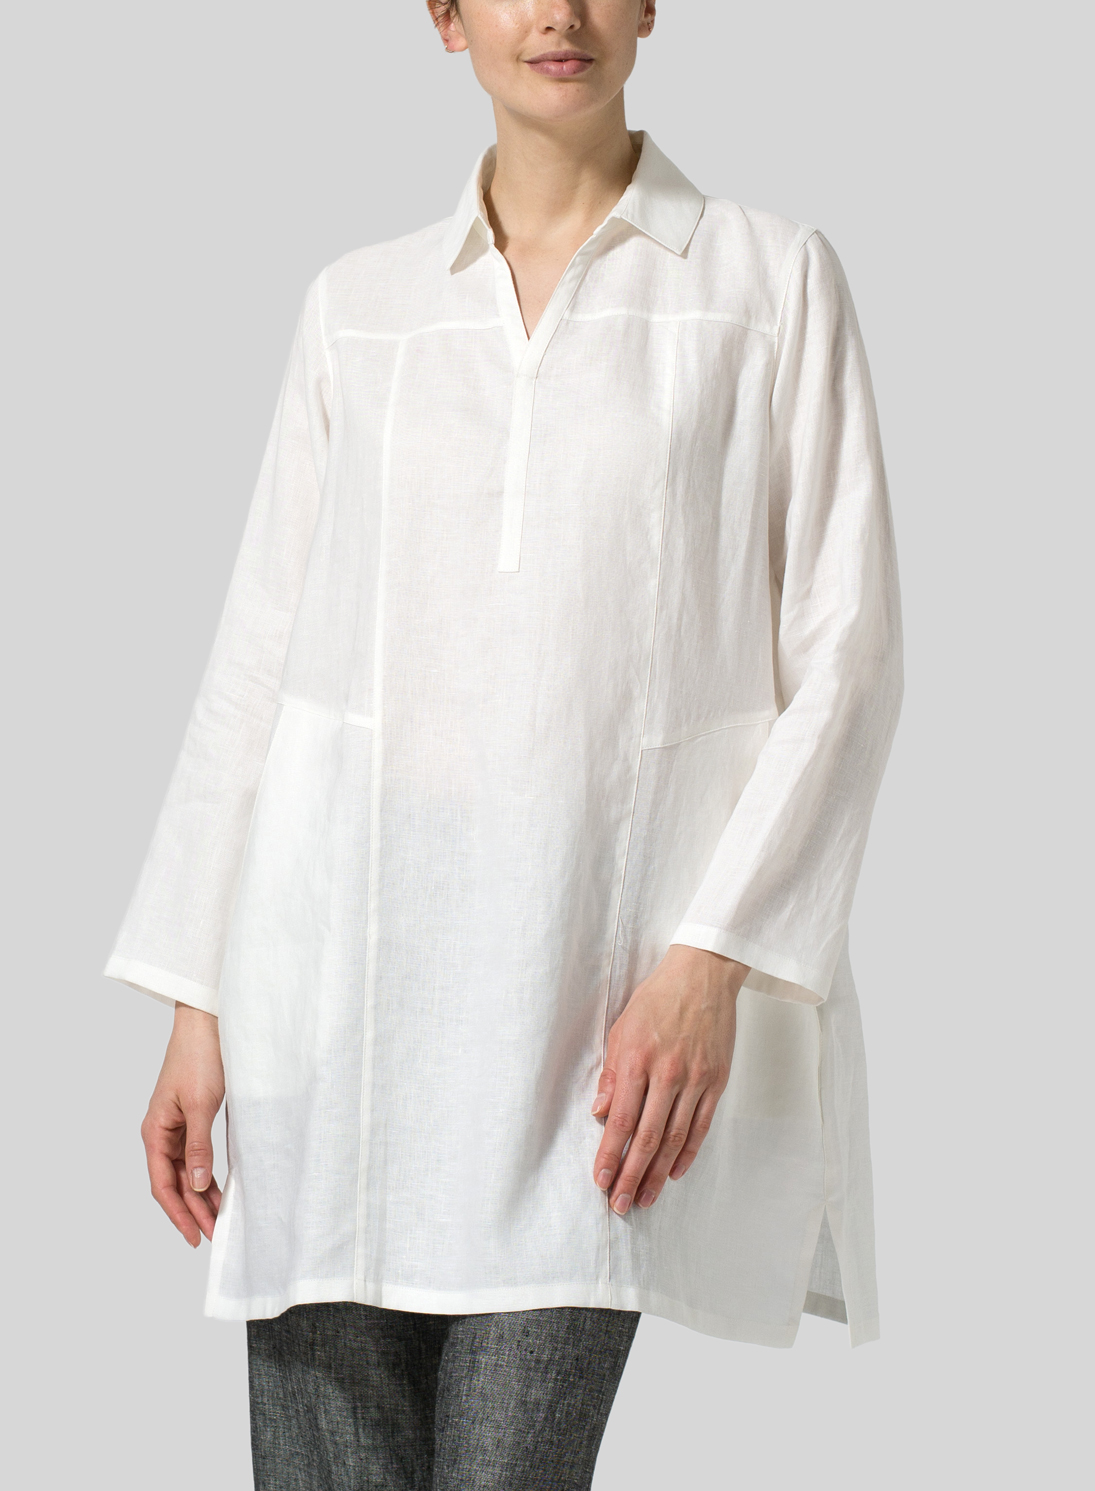 White Linen L/Sleeves V-Neck Tunic - Plus Size